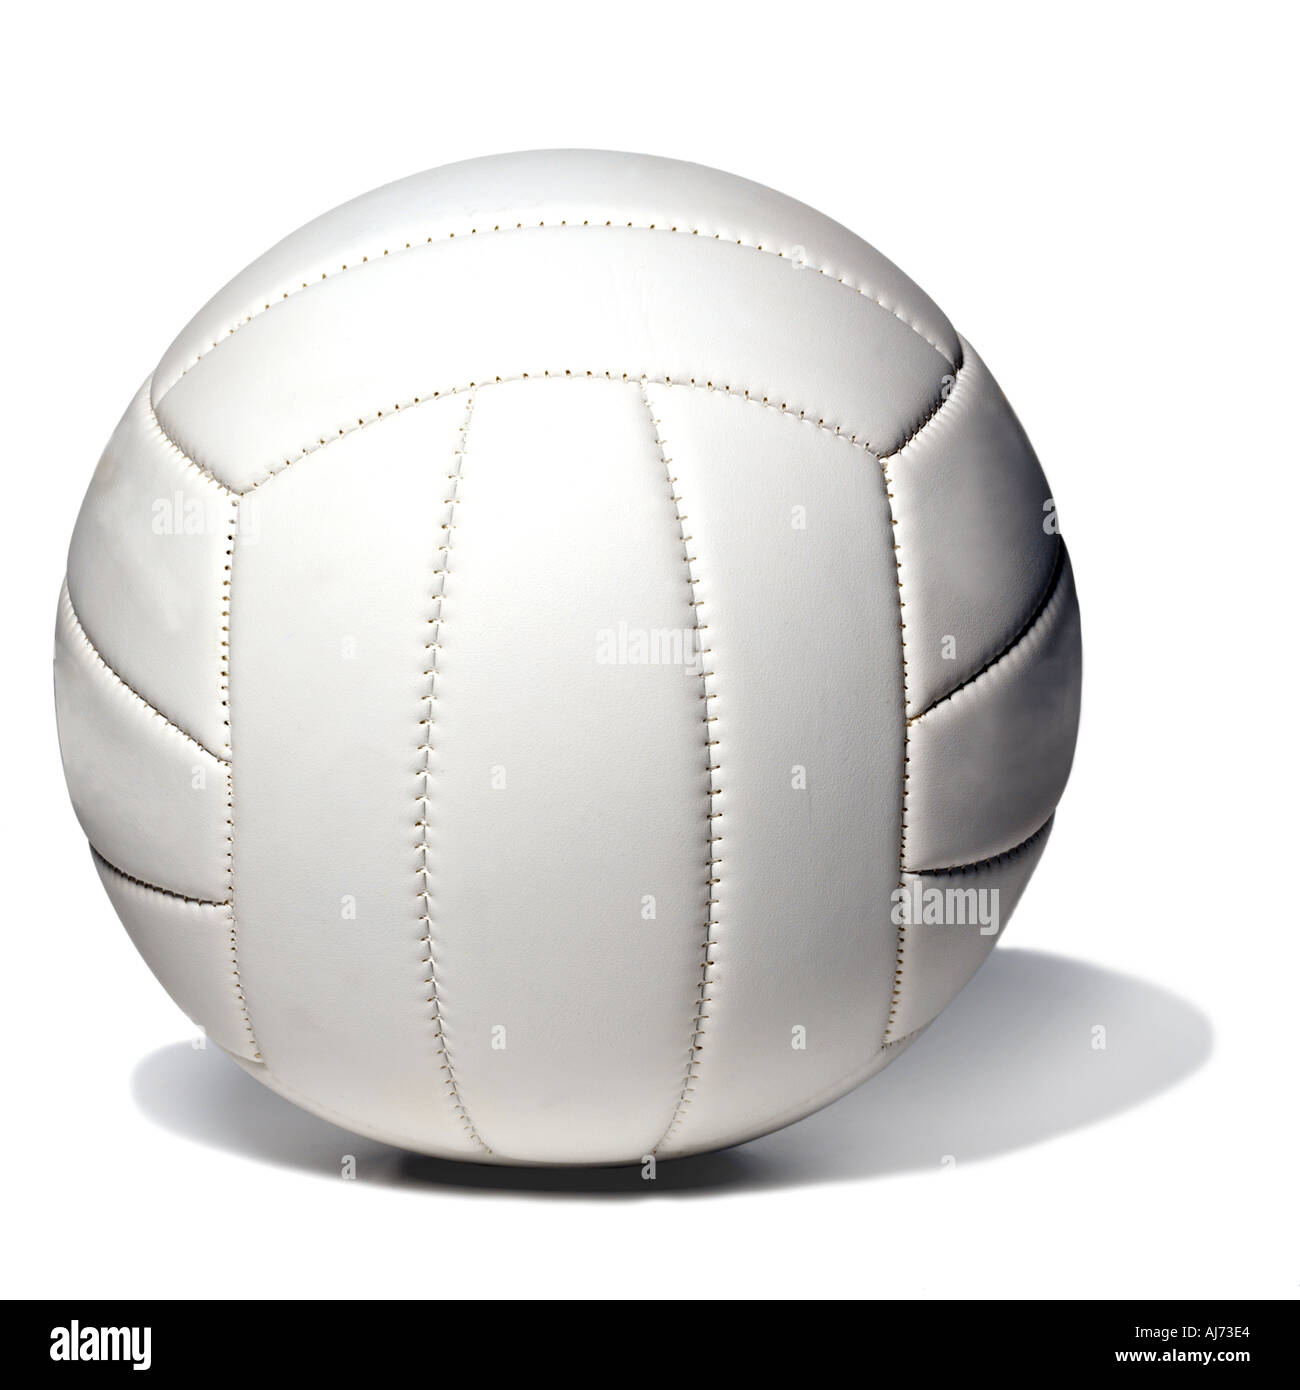 Ballon de volley Banque D'Images